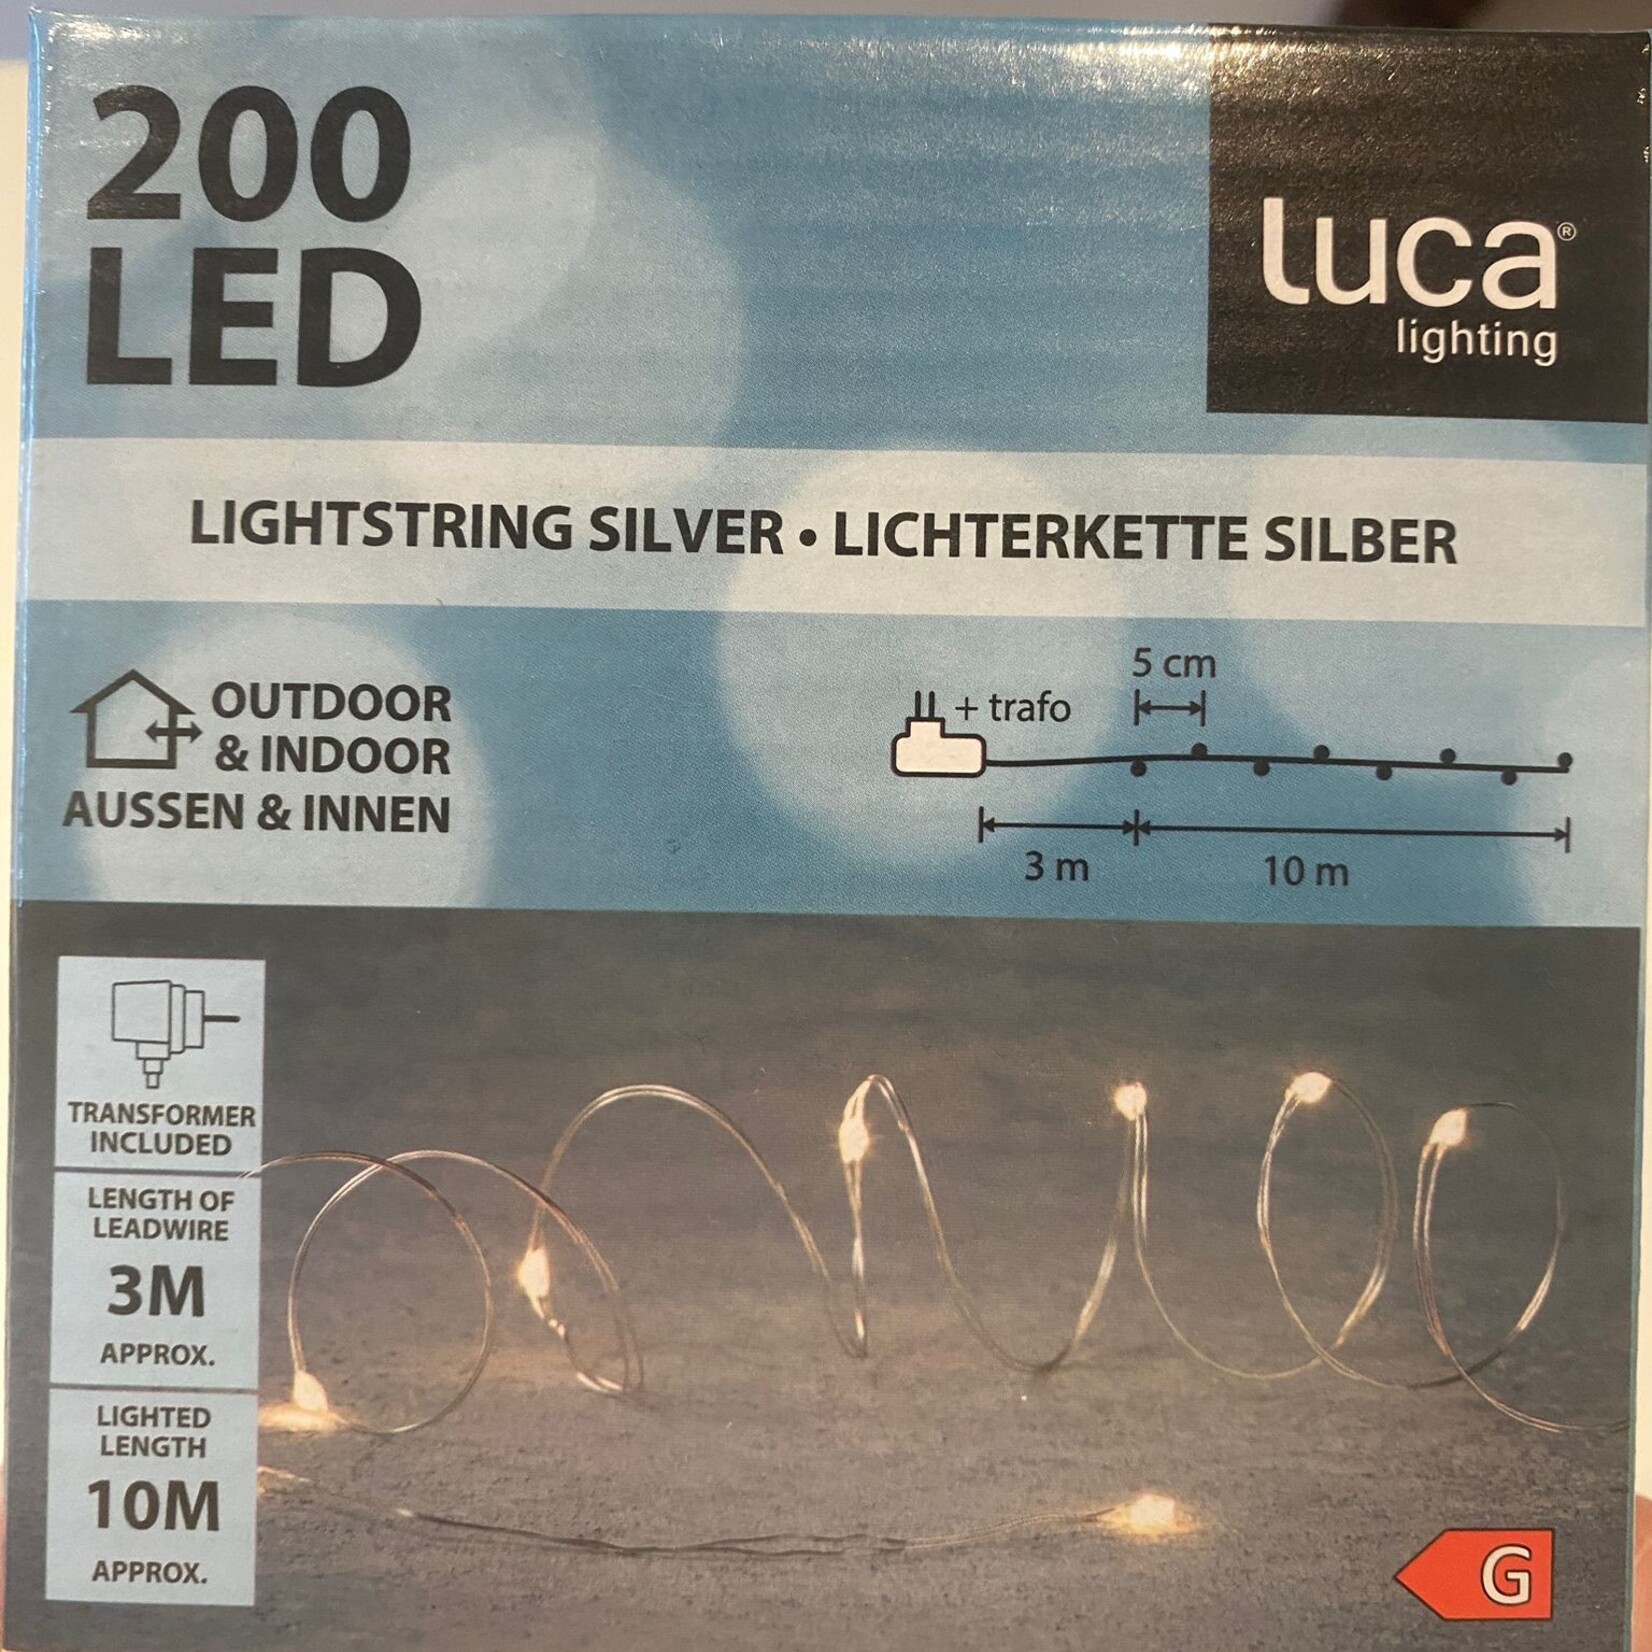 Lichtsnoer zilver 200 LED 10m